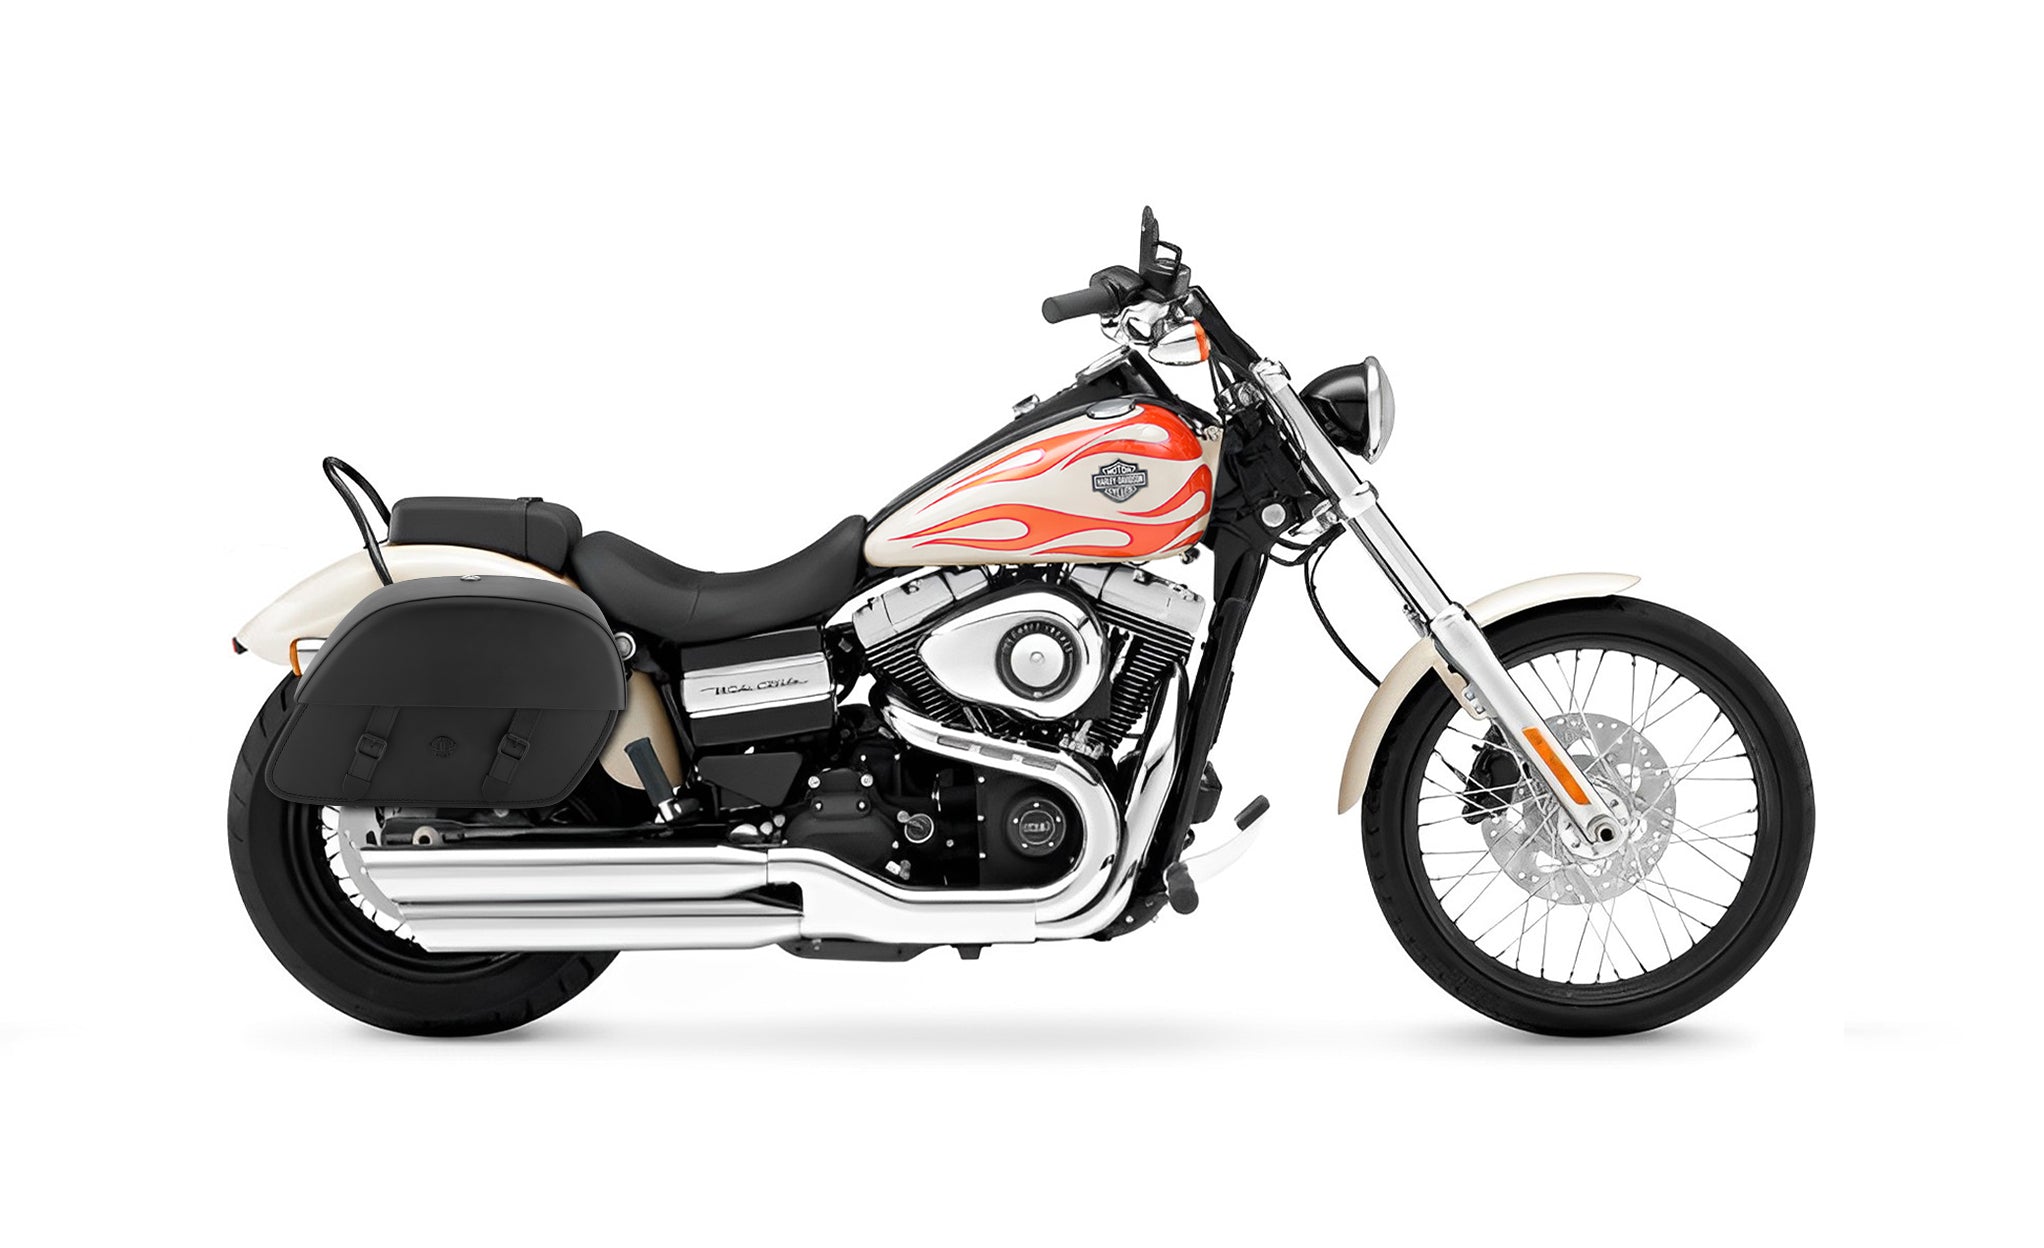 28L - Baelor Medium Quick Mount Motorcycle Saddlebags For Harley Davidson Dyna Wide Glide FXDWG/I @expand